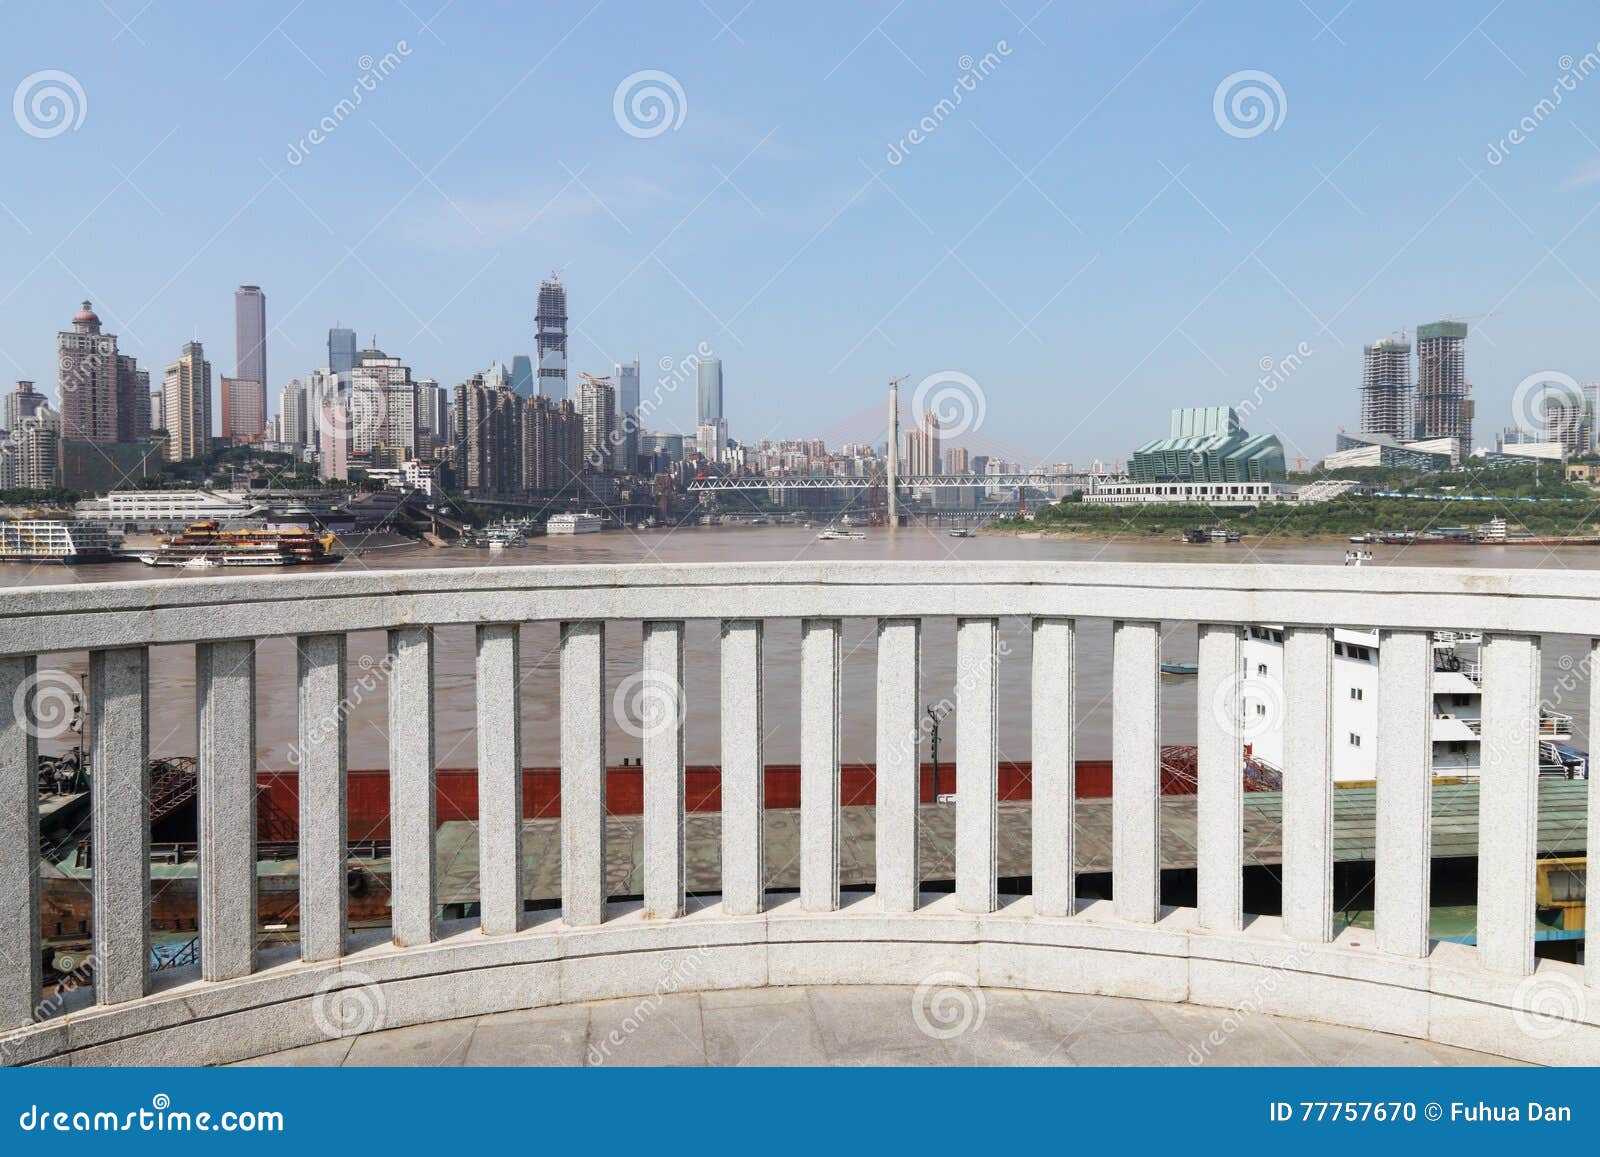 City balcony stock photo. Image of river, railing, building - 77757670